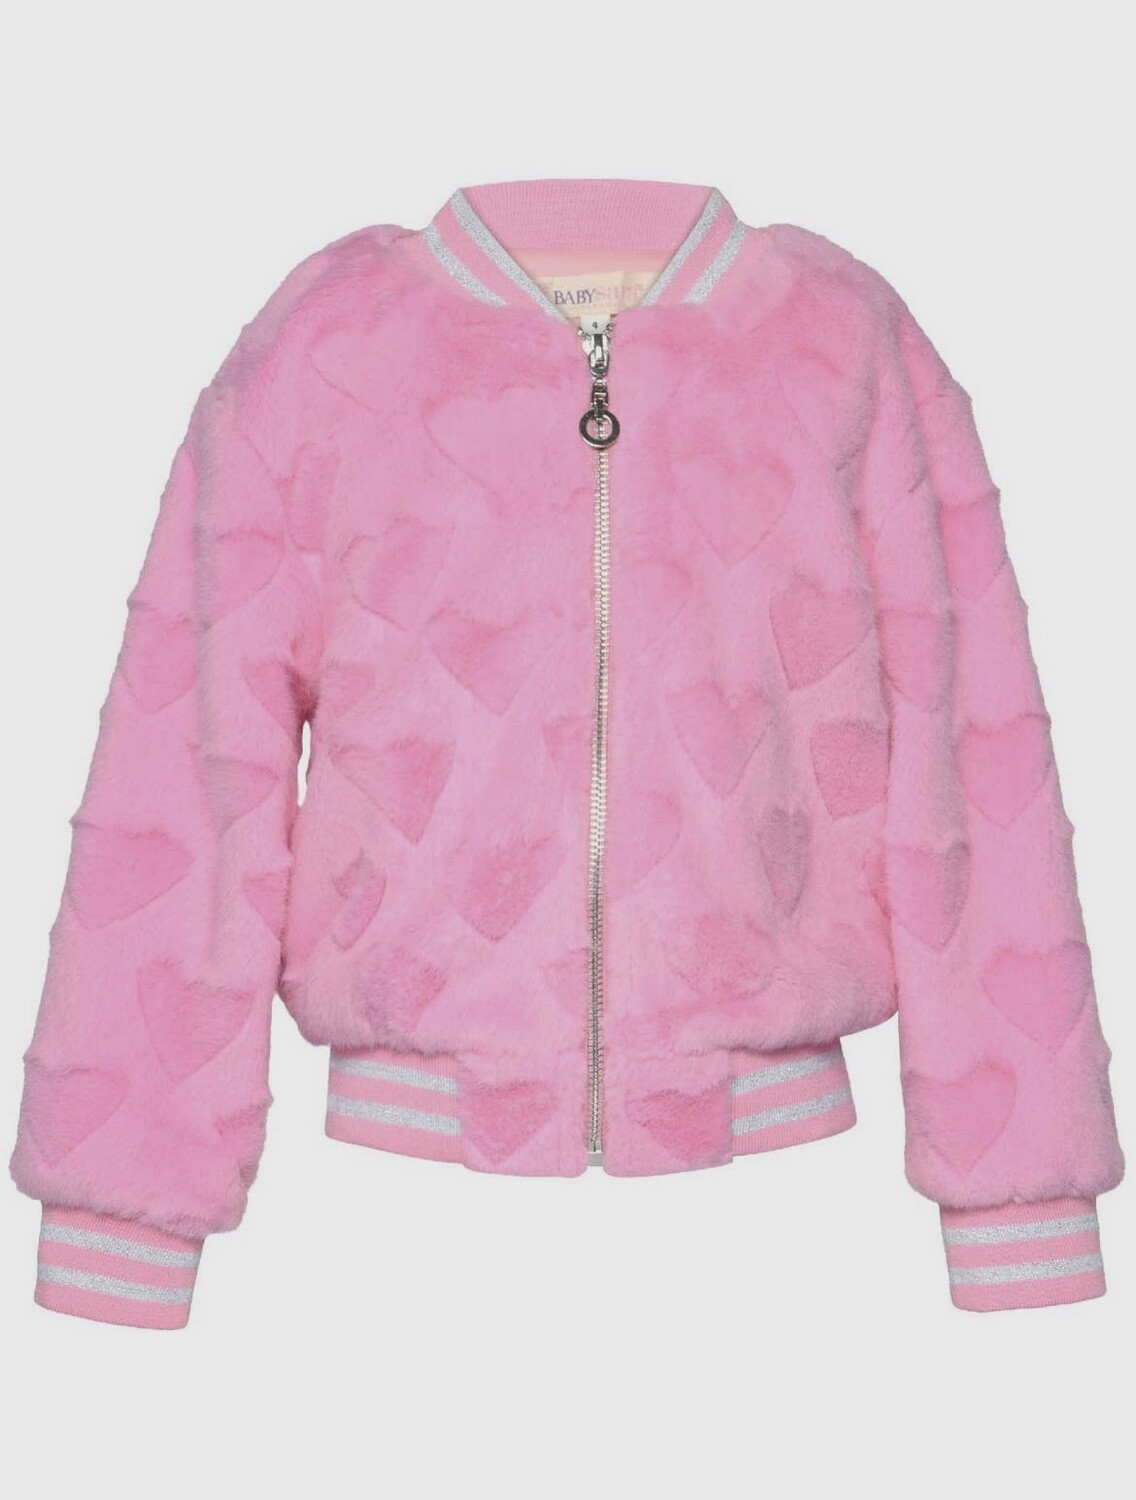 Baby Sara Girls Pink Heart Bomber Jacket 031